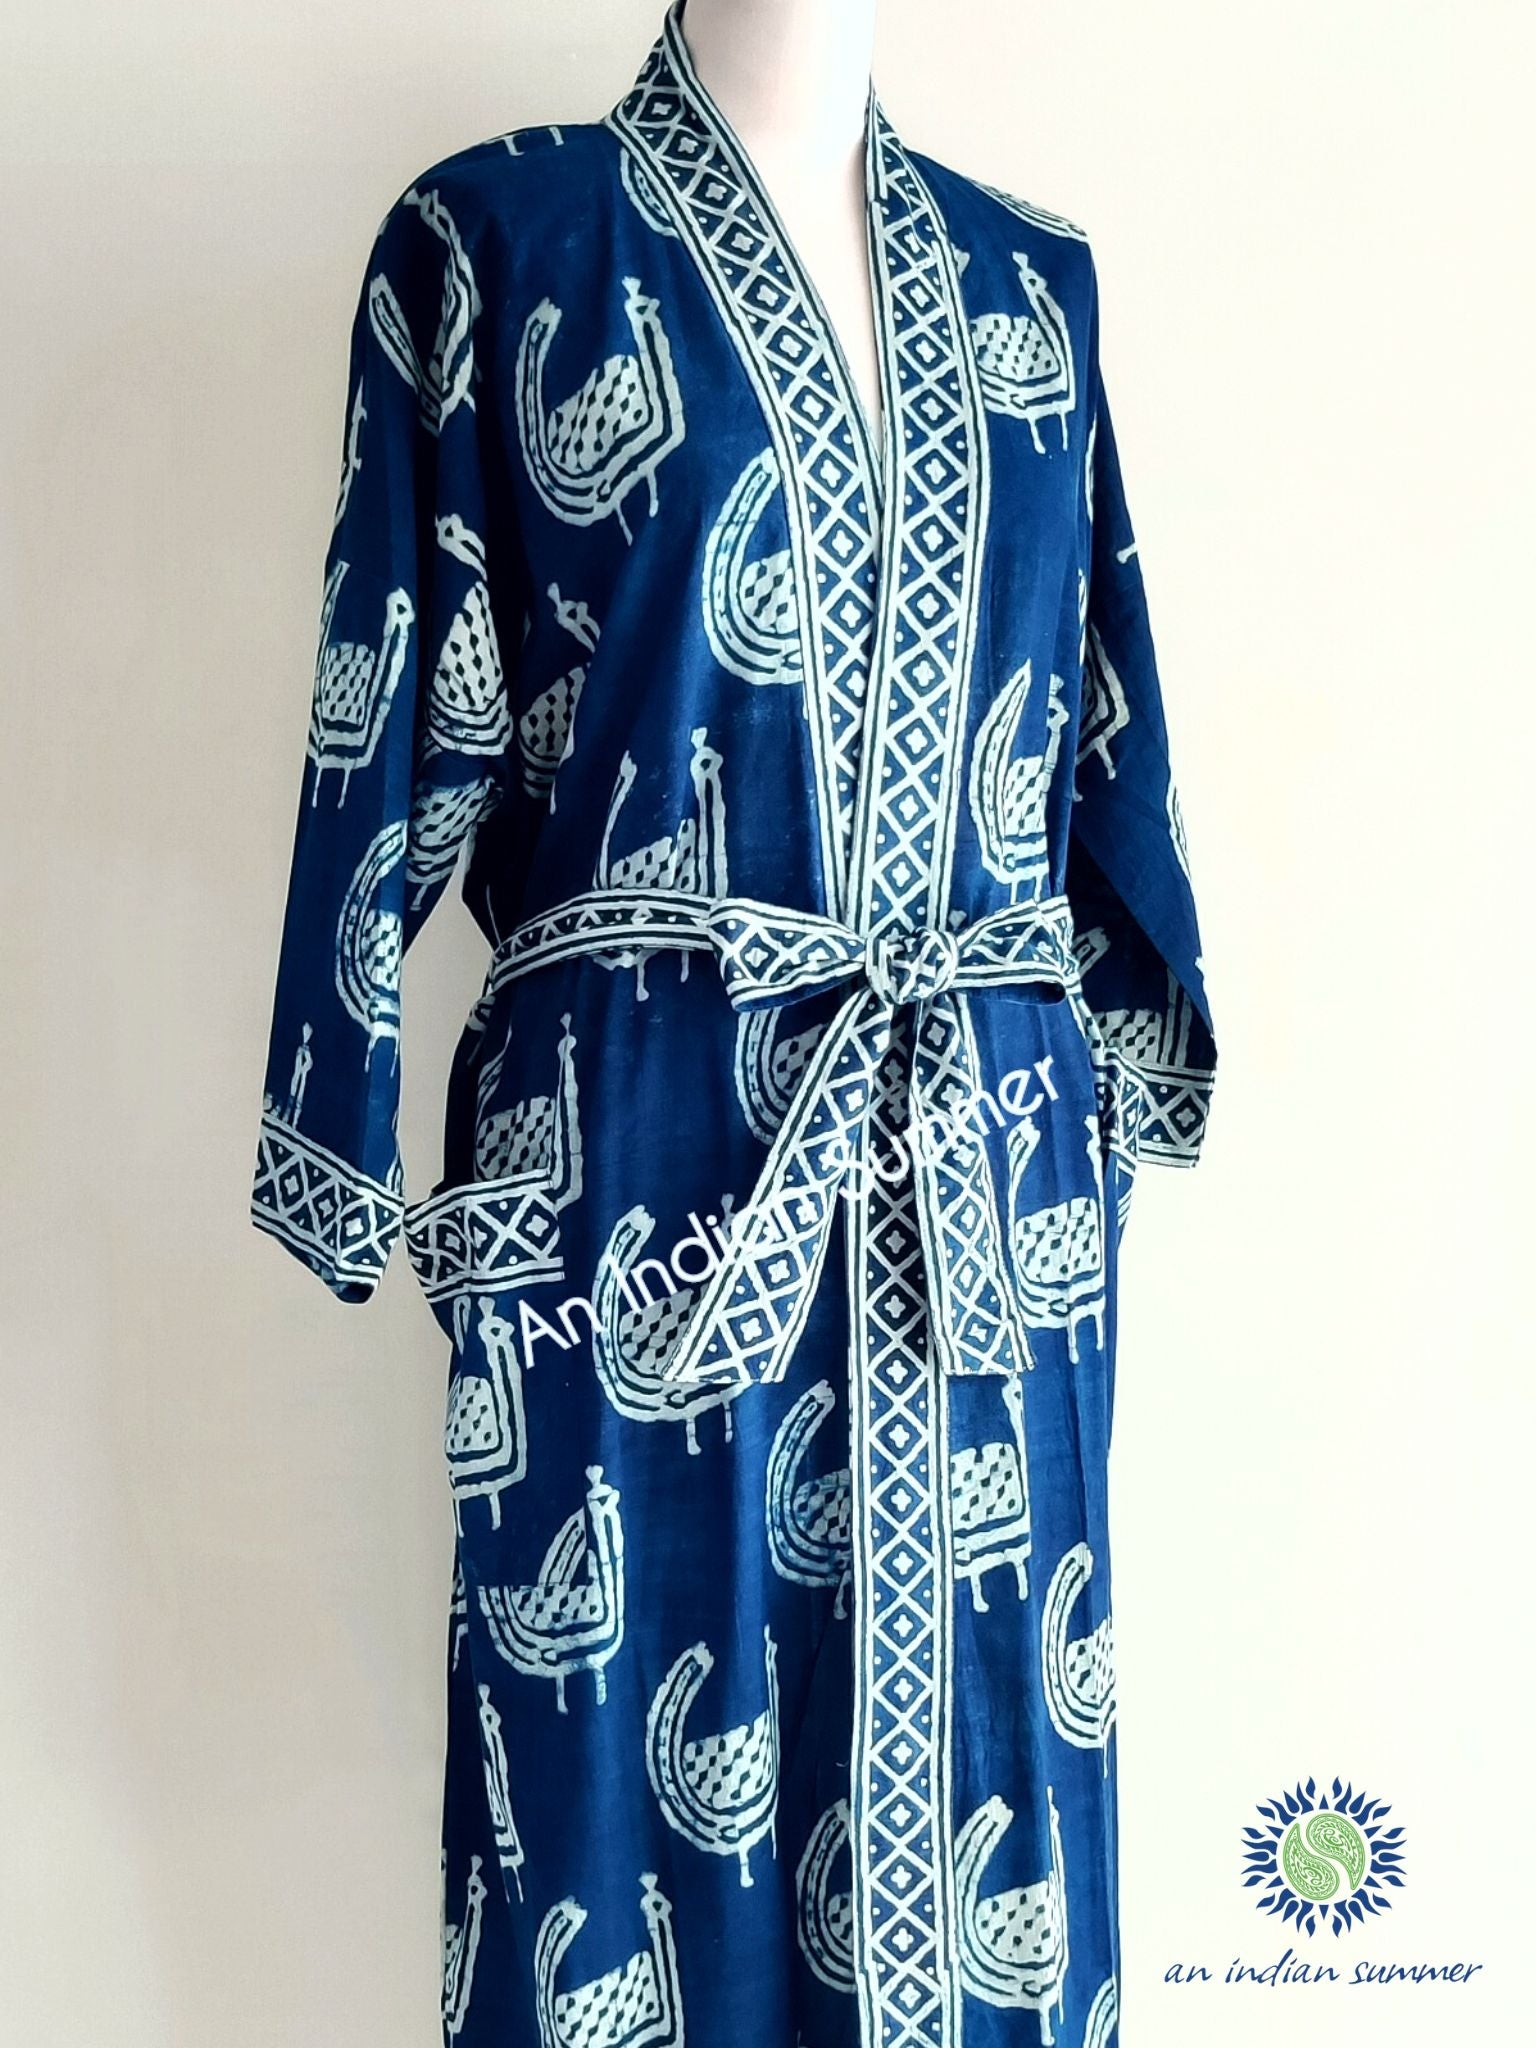 Short Kimono Robe | Natural Indigo Dyed Plant Dye | Peacock Design Block Print | Hand Block Printed | Cotton Voile | An Indian Summer | Seasonless Timeless Sustainable Ethical Authentic Artisan Conscious Clothing Lifestyle Brand